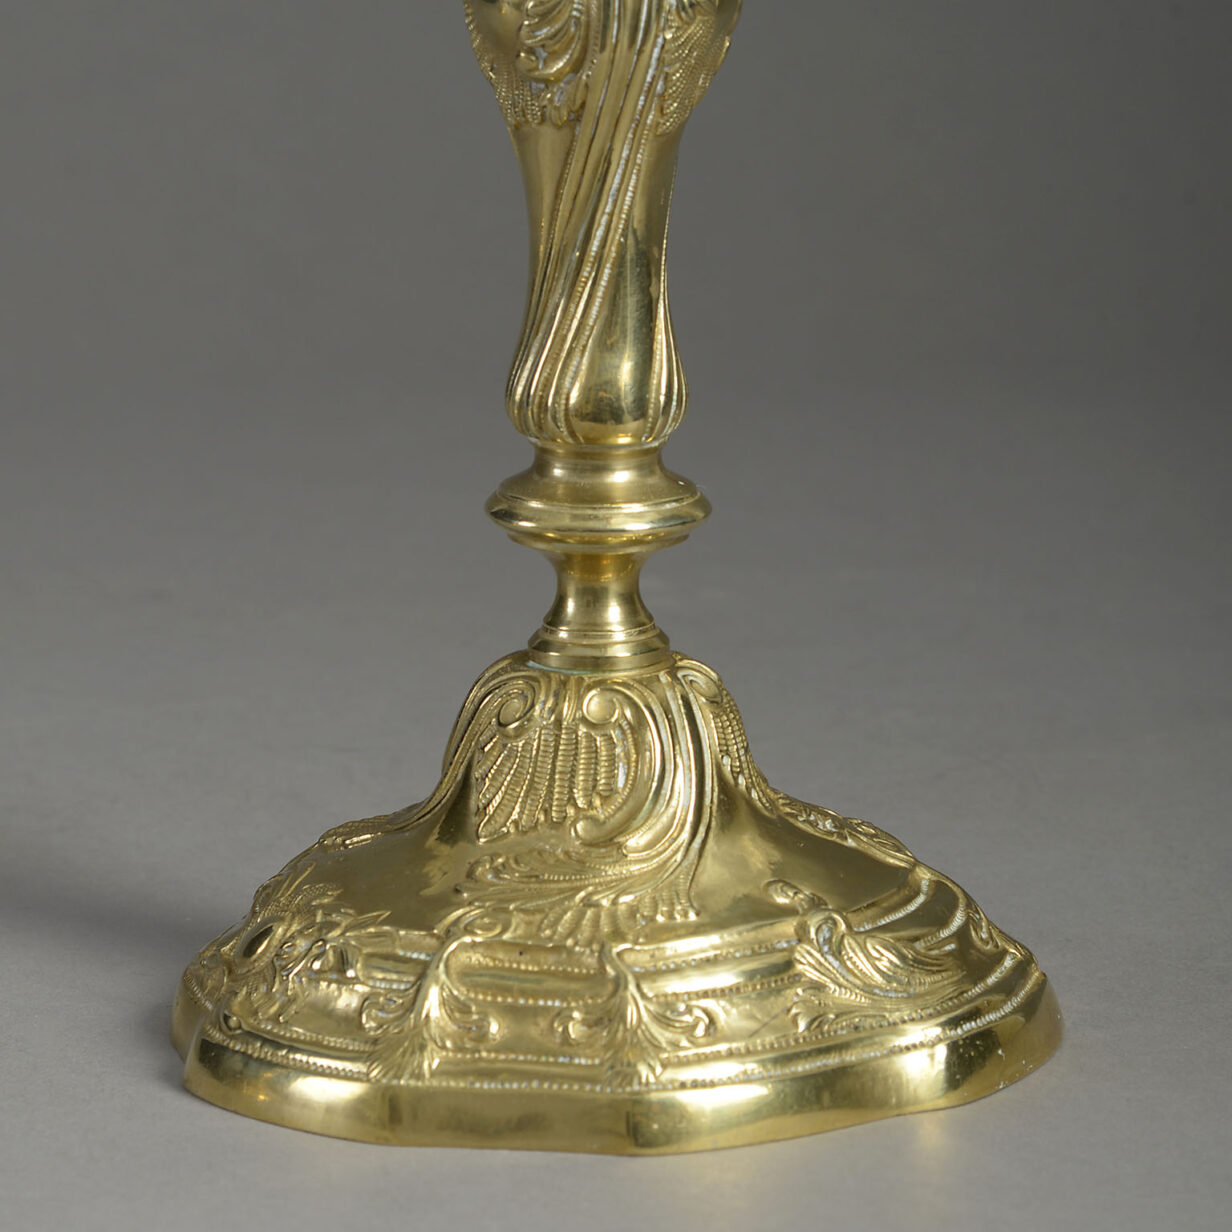 Pair of 18th century louis xv period rococo brass candlesticks